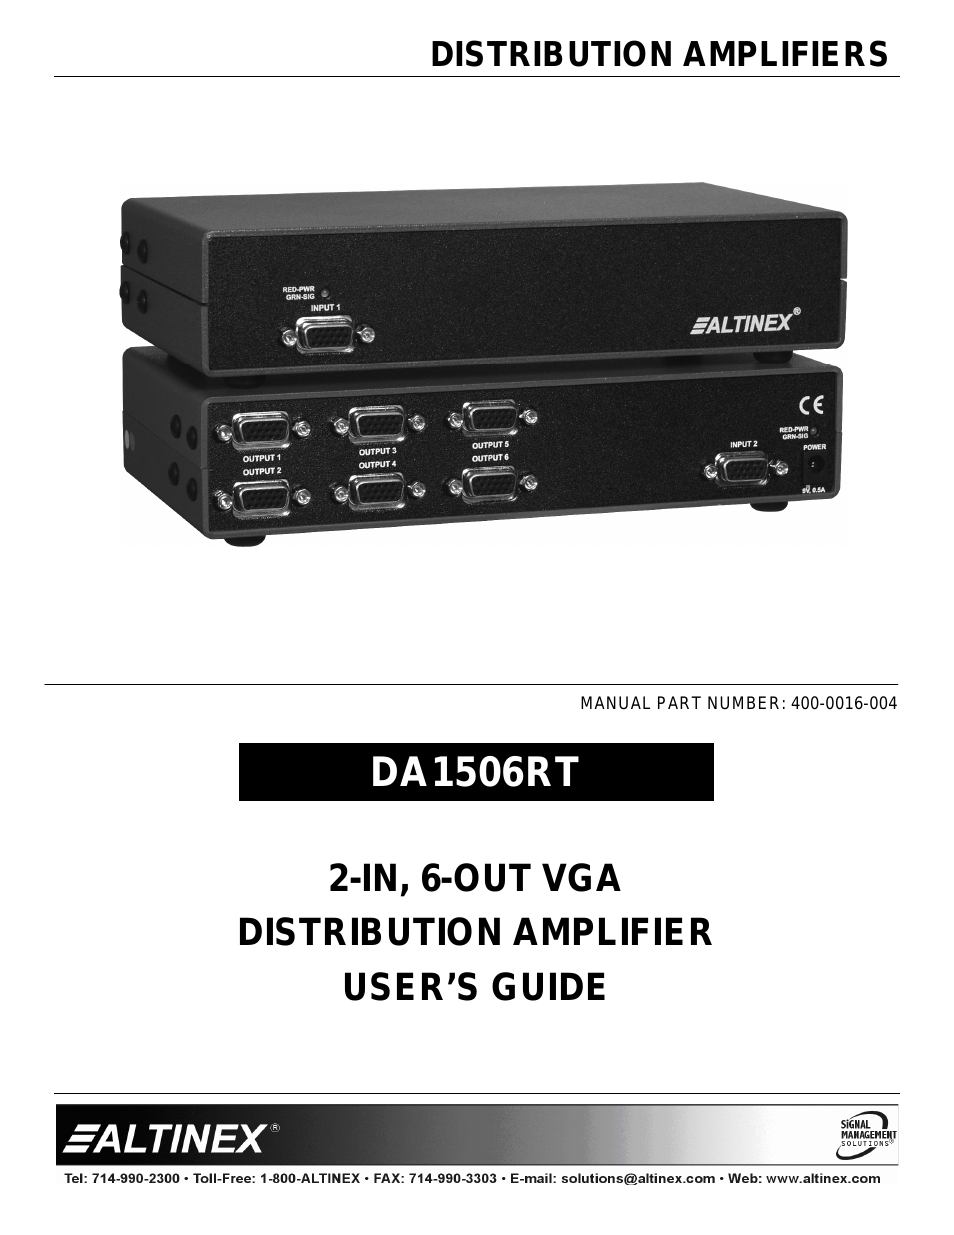 Distribution Amplifier DA1506RT (Page 1)